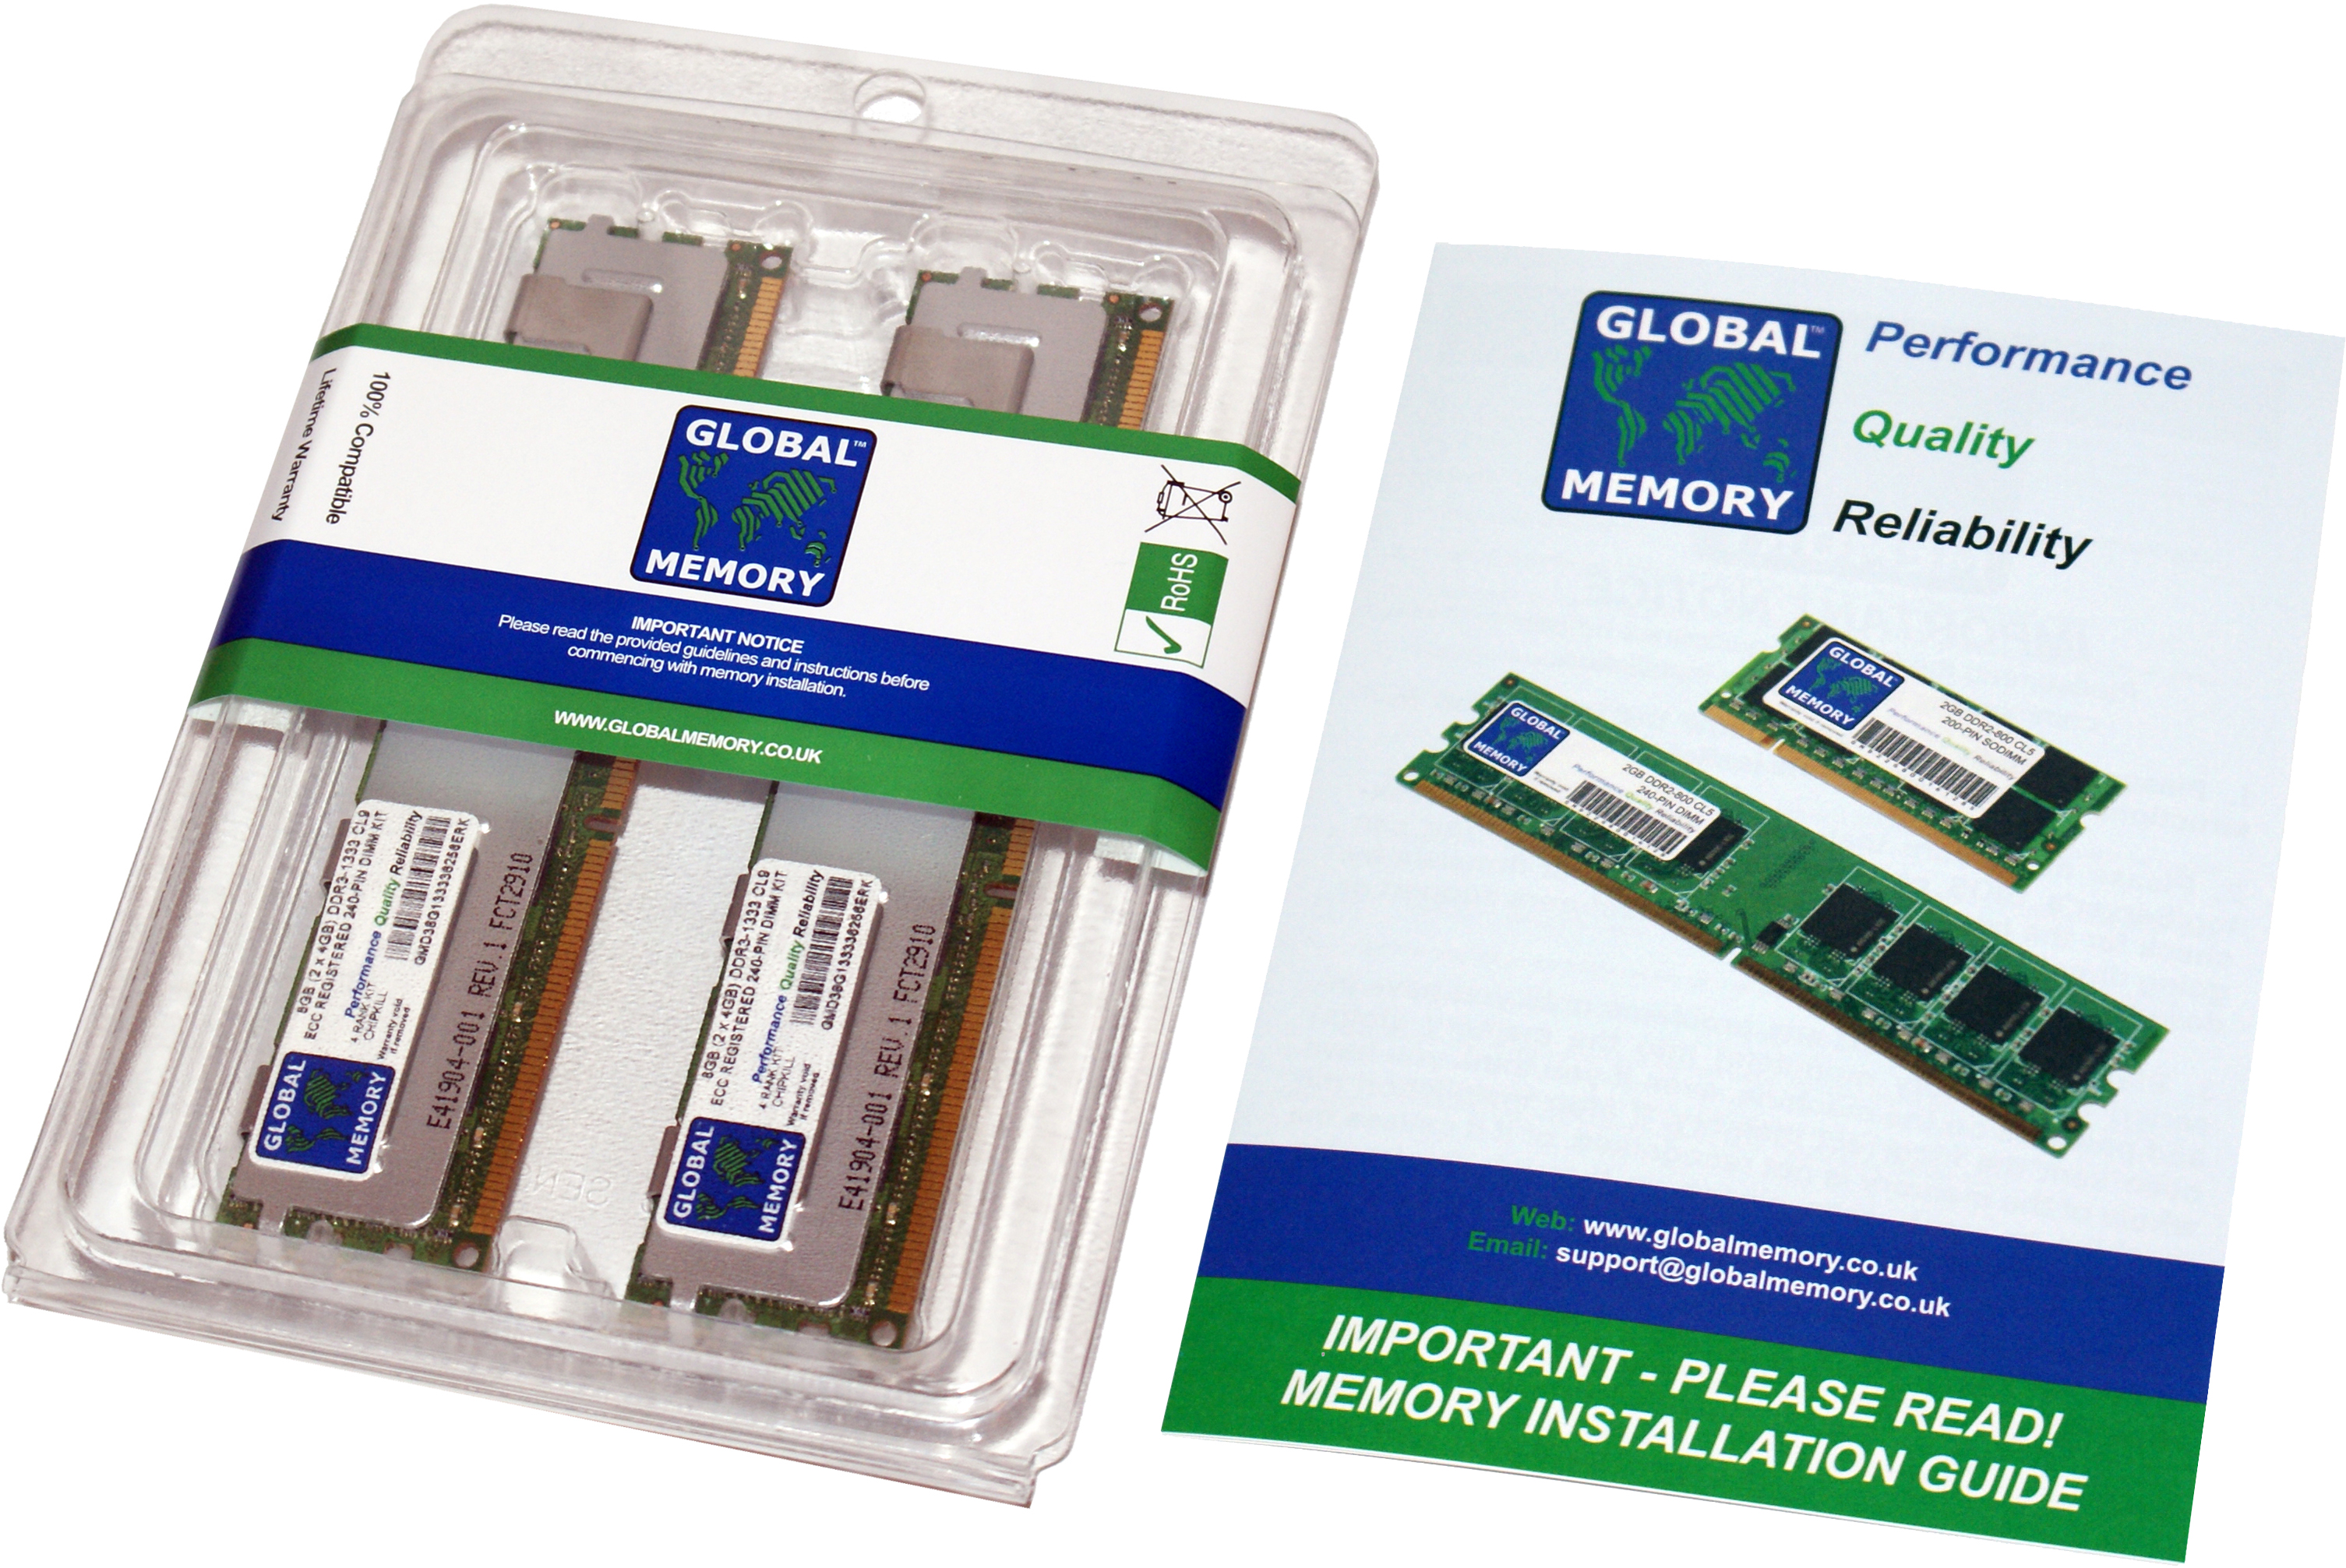 32GB (2 x 16GB) DDR3 1333MHz PC3-10600 240-PIN ECC REGISTERED DIMM (RDIMM) MEMORY RAM KIT FOR SUN SERVERS/WORKSTATIONS (8 RANK KIT NON-CHIPKILL)